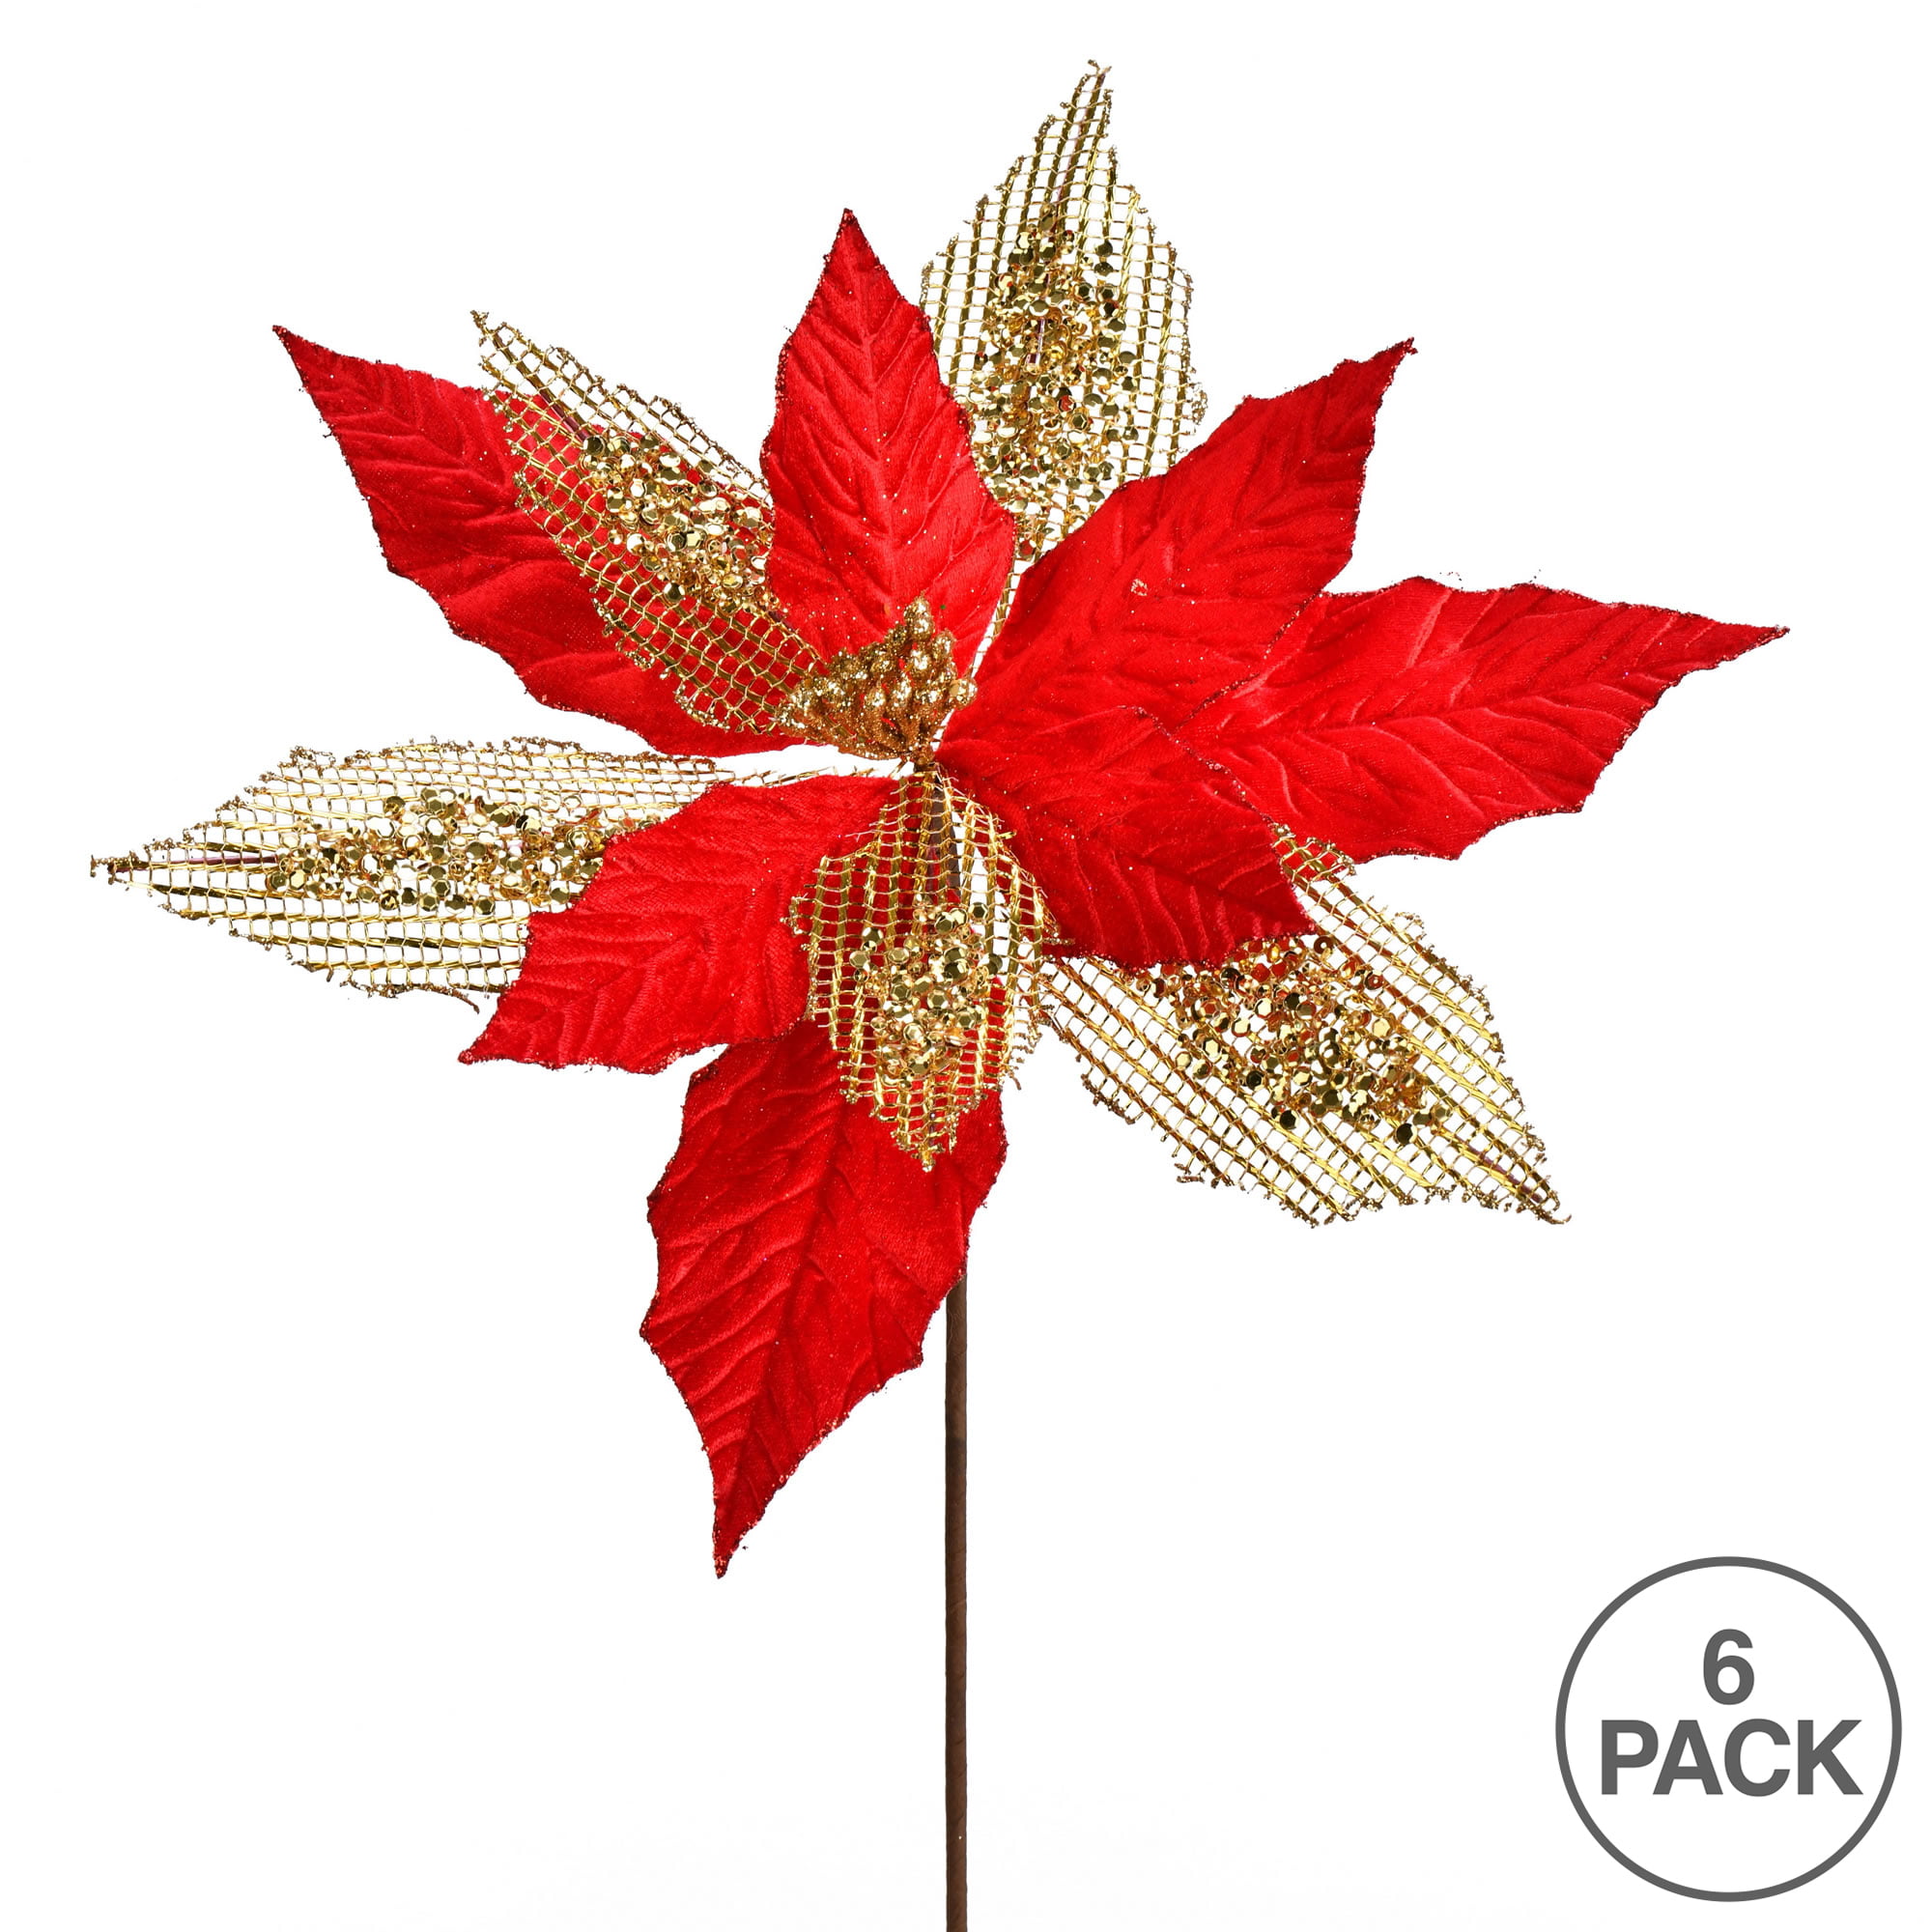  Meishen 6 Pack Poinsettias Artificial Christmas